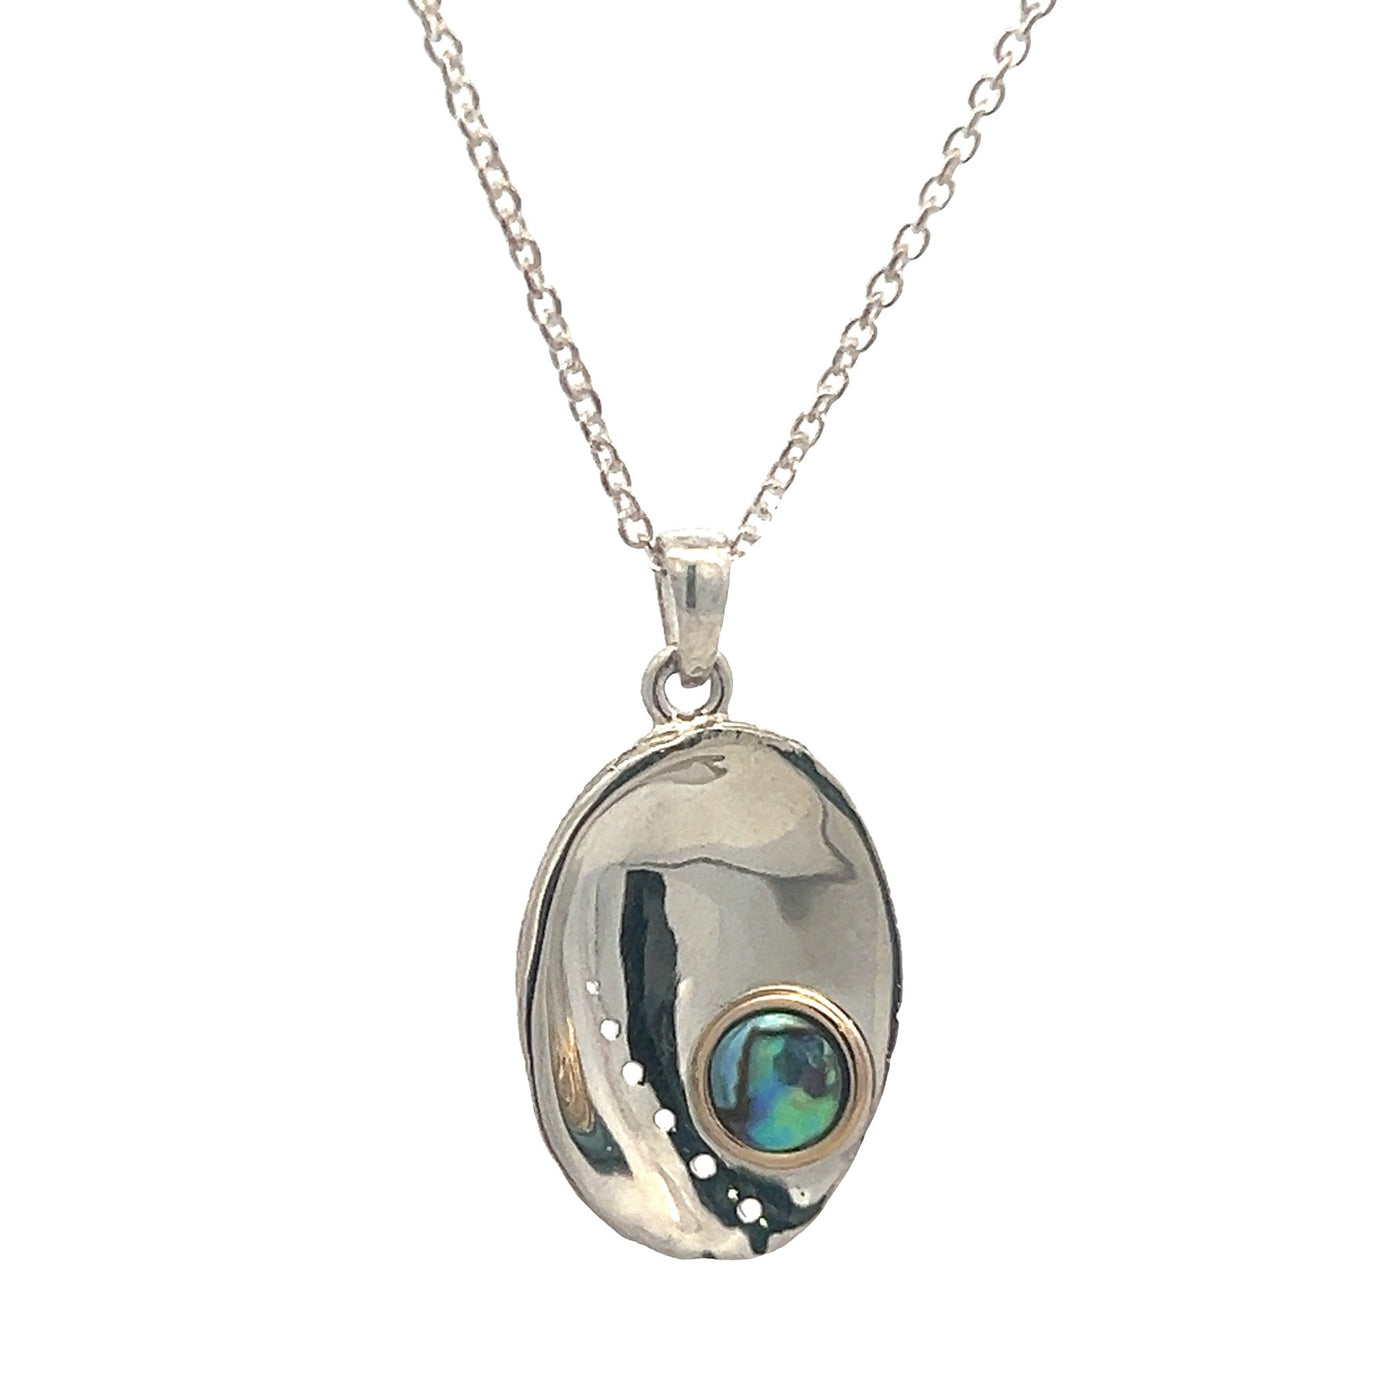 Pearl Paua Shell Necklace - Small